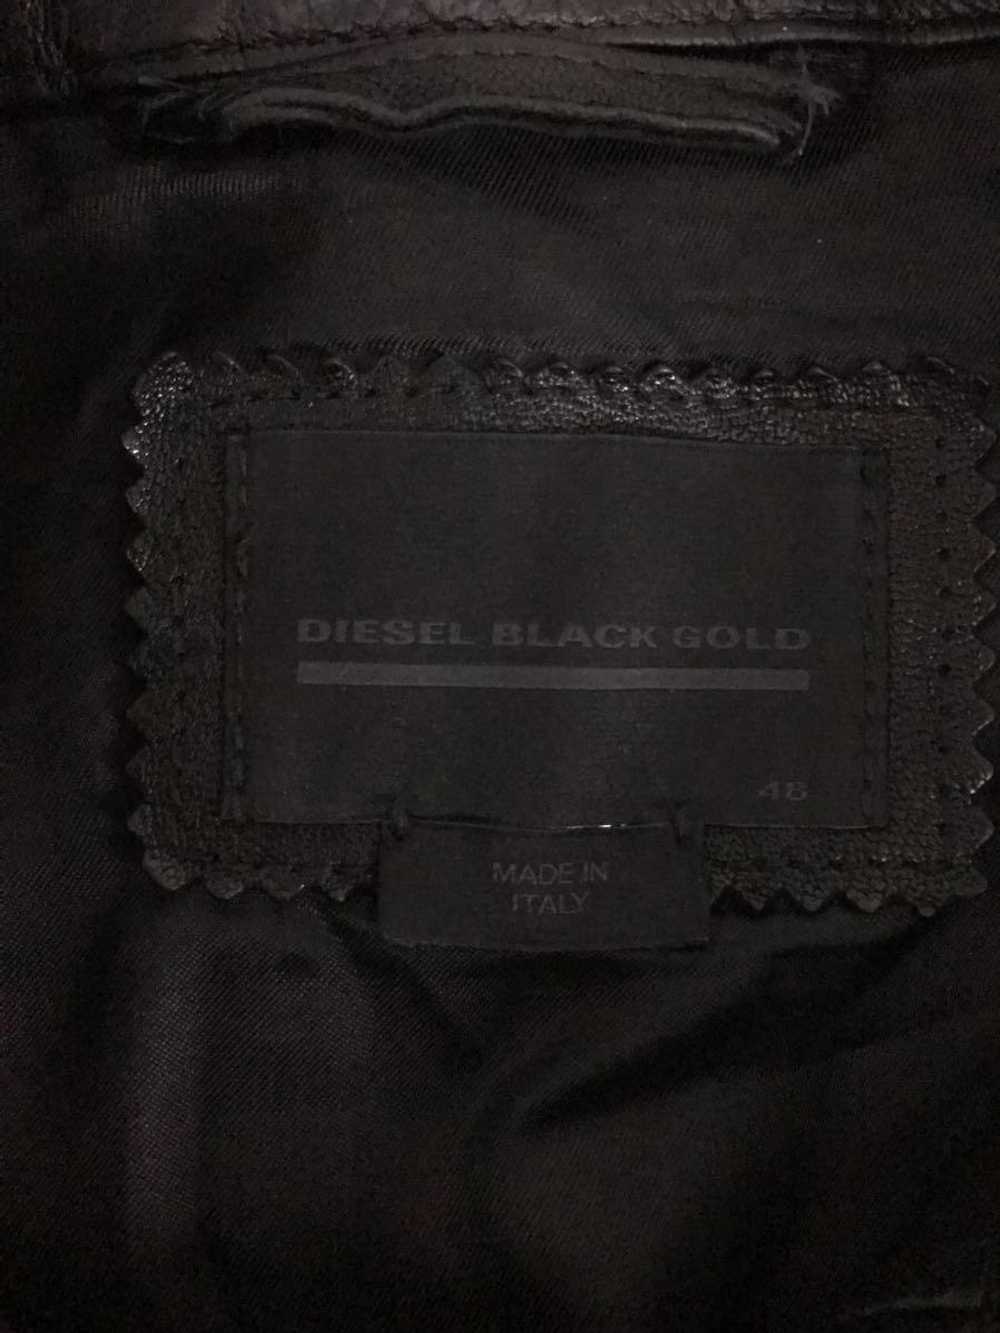 Men's Diesel Blackgold Leather Jacket Blouson/40/… - image 3